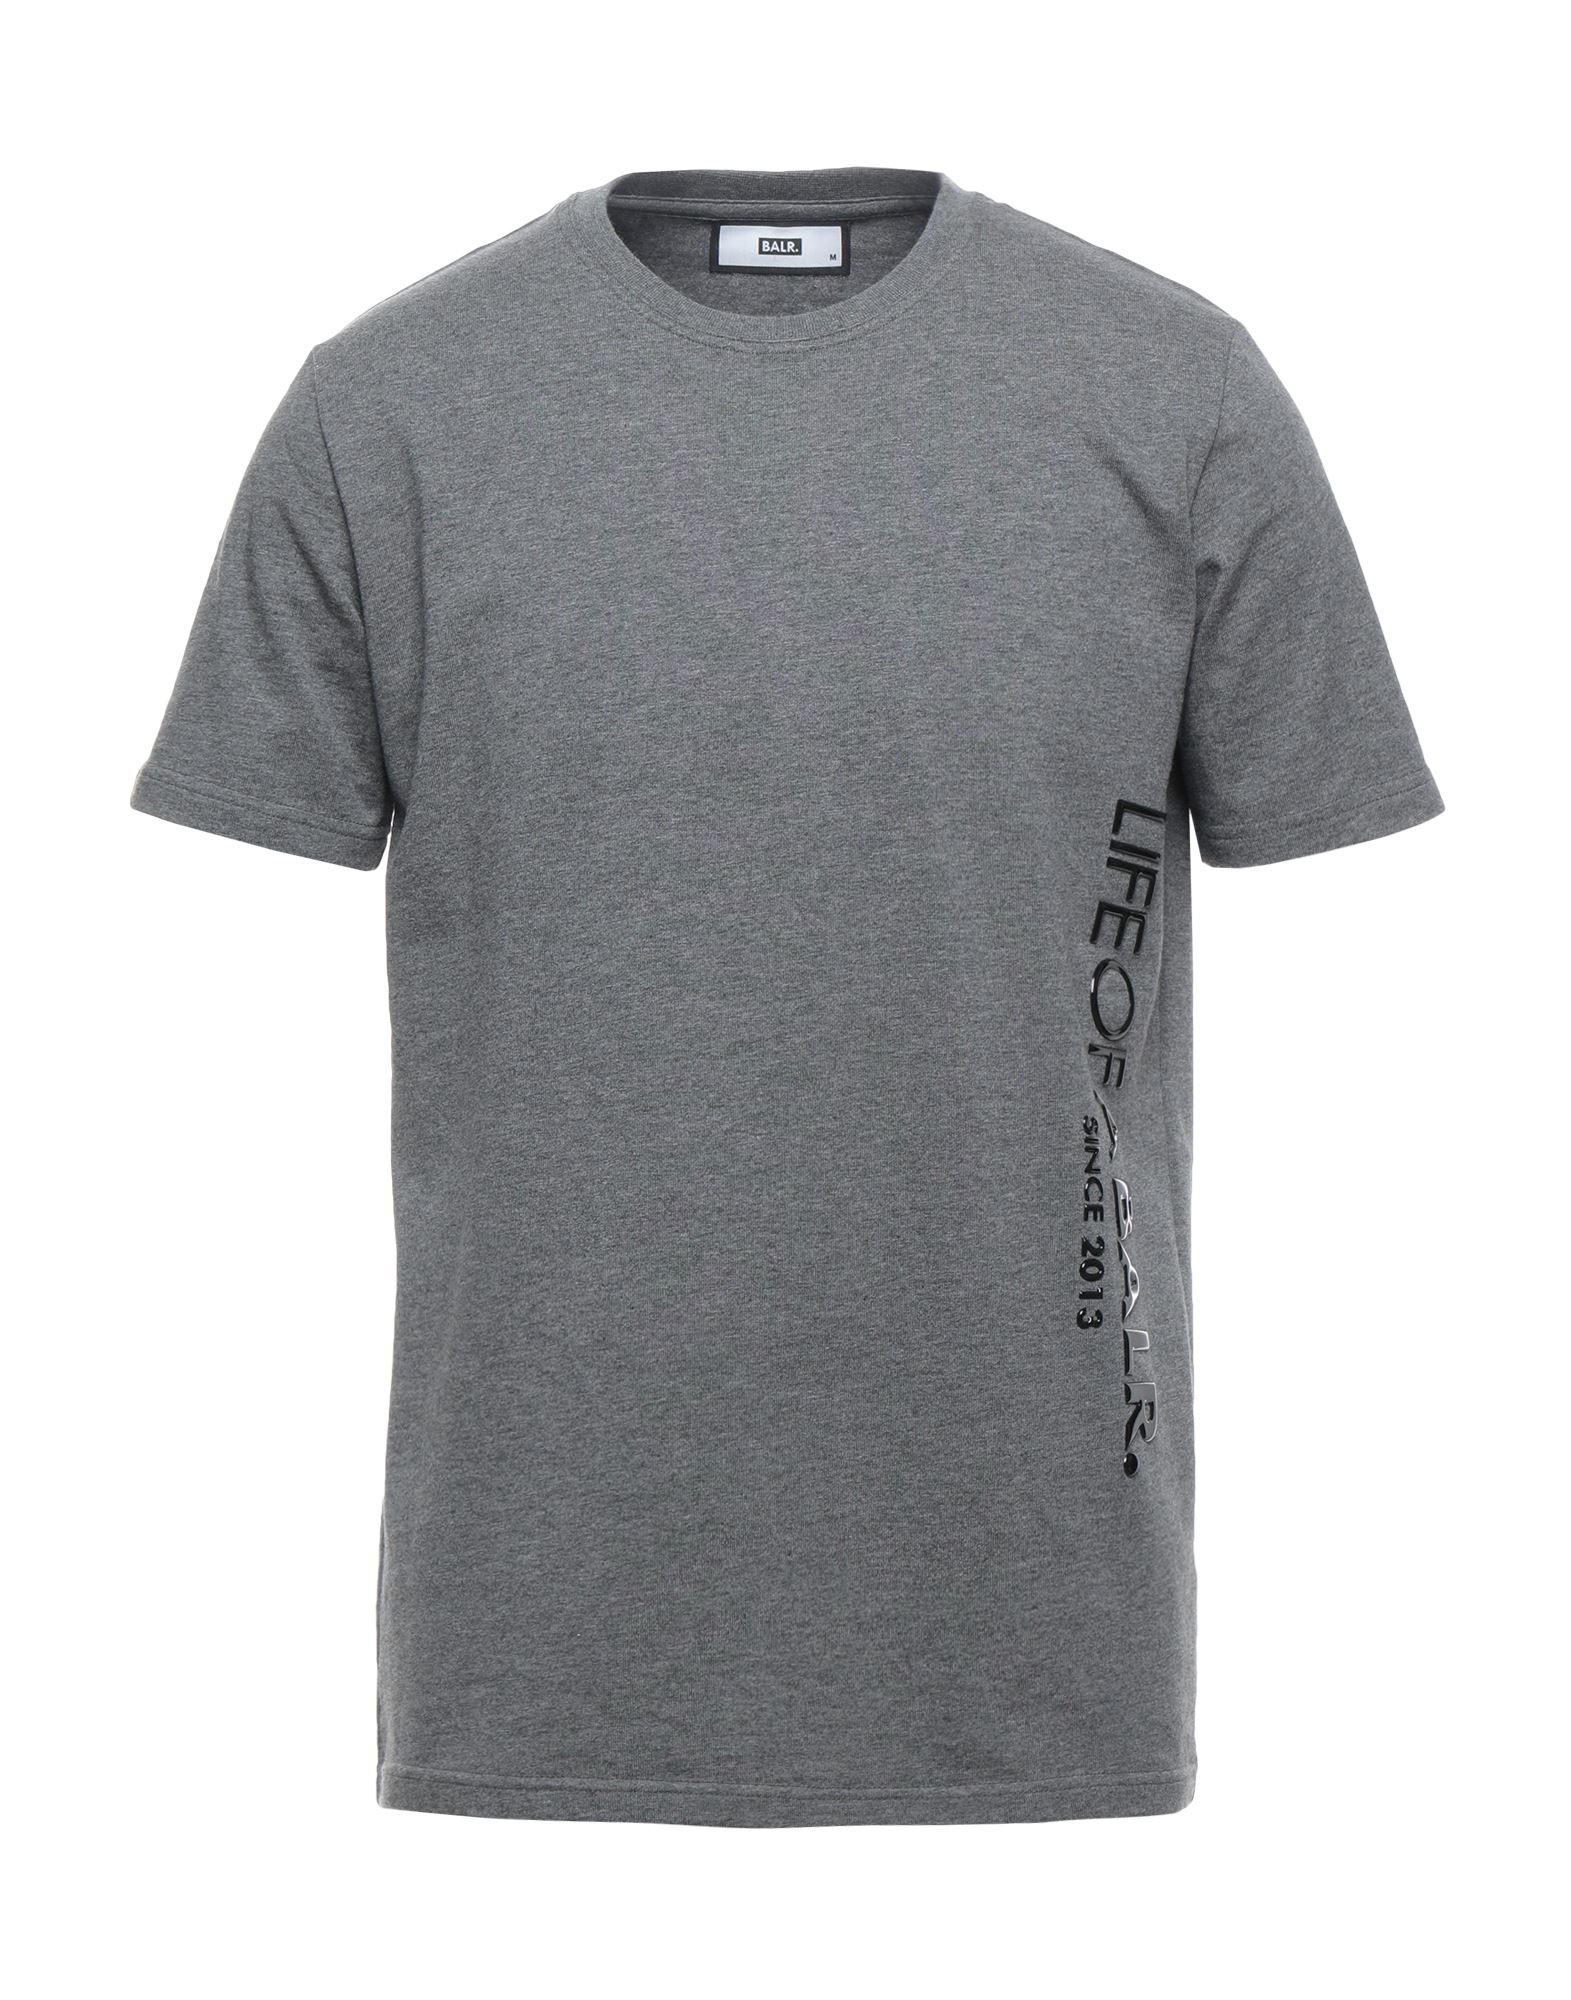 Balr. T-shirts In Grey